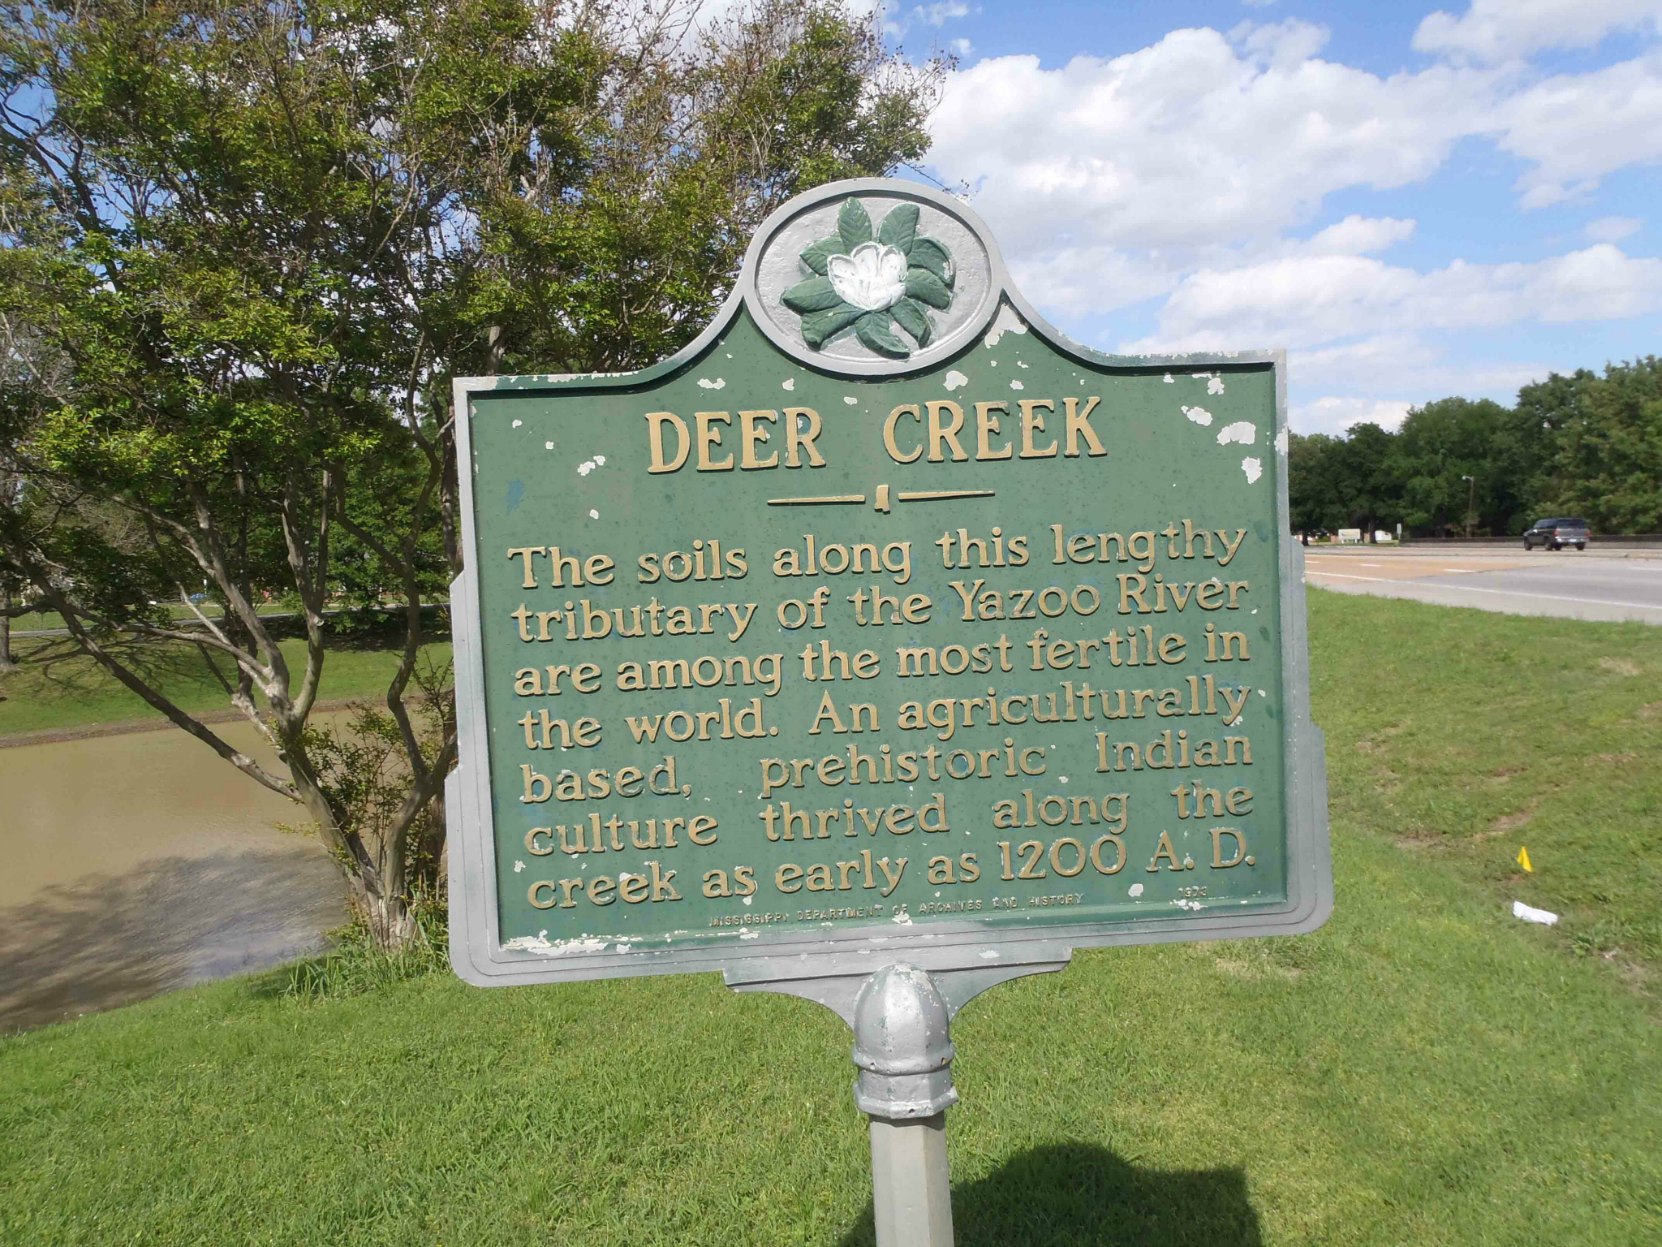 Mississippi Department of Archives & History marker for Deer Creek, near Leland, Mississippi